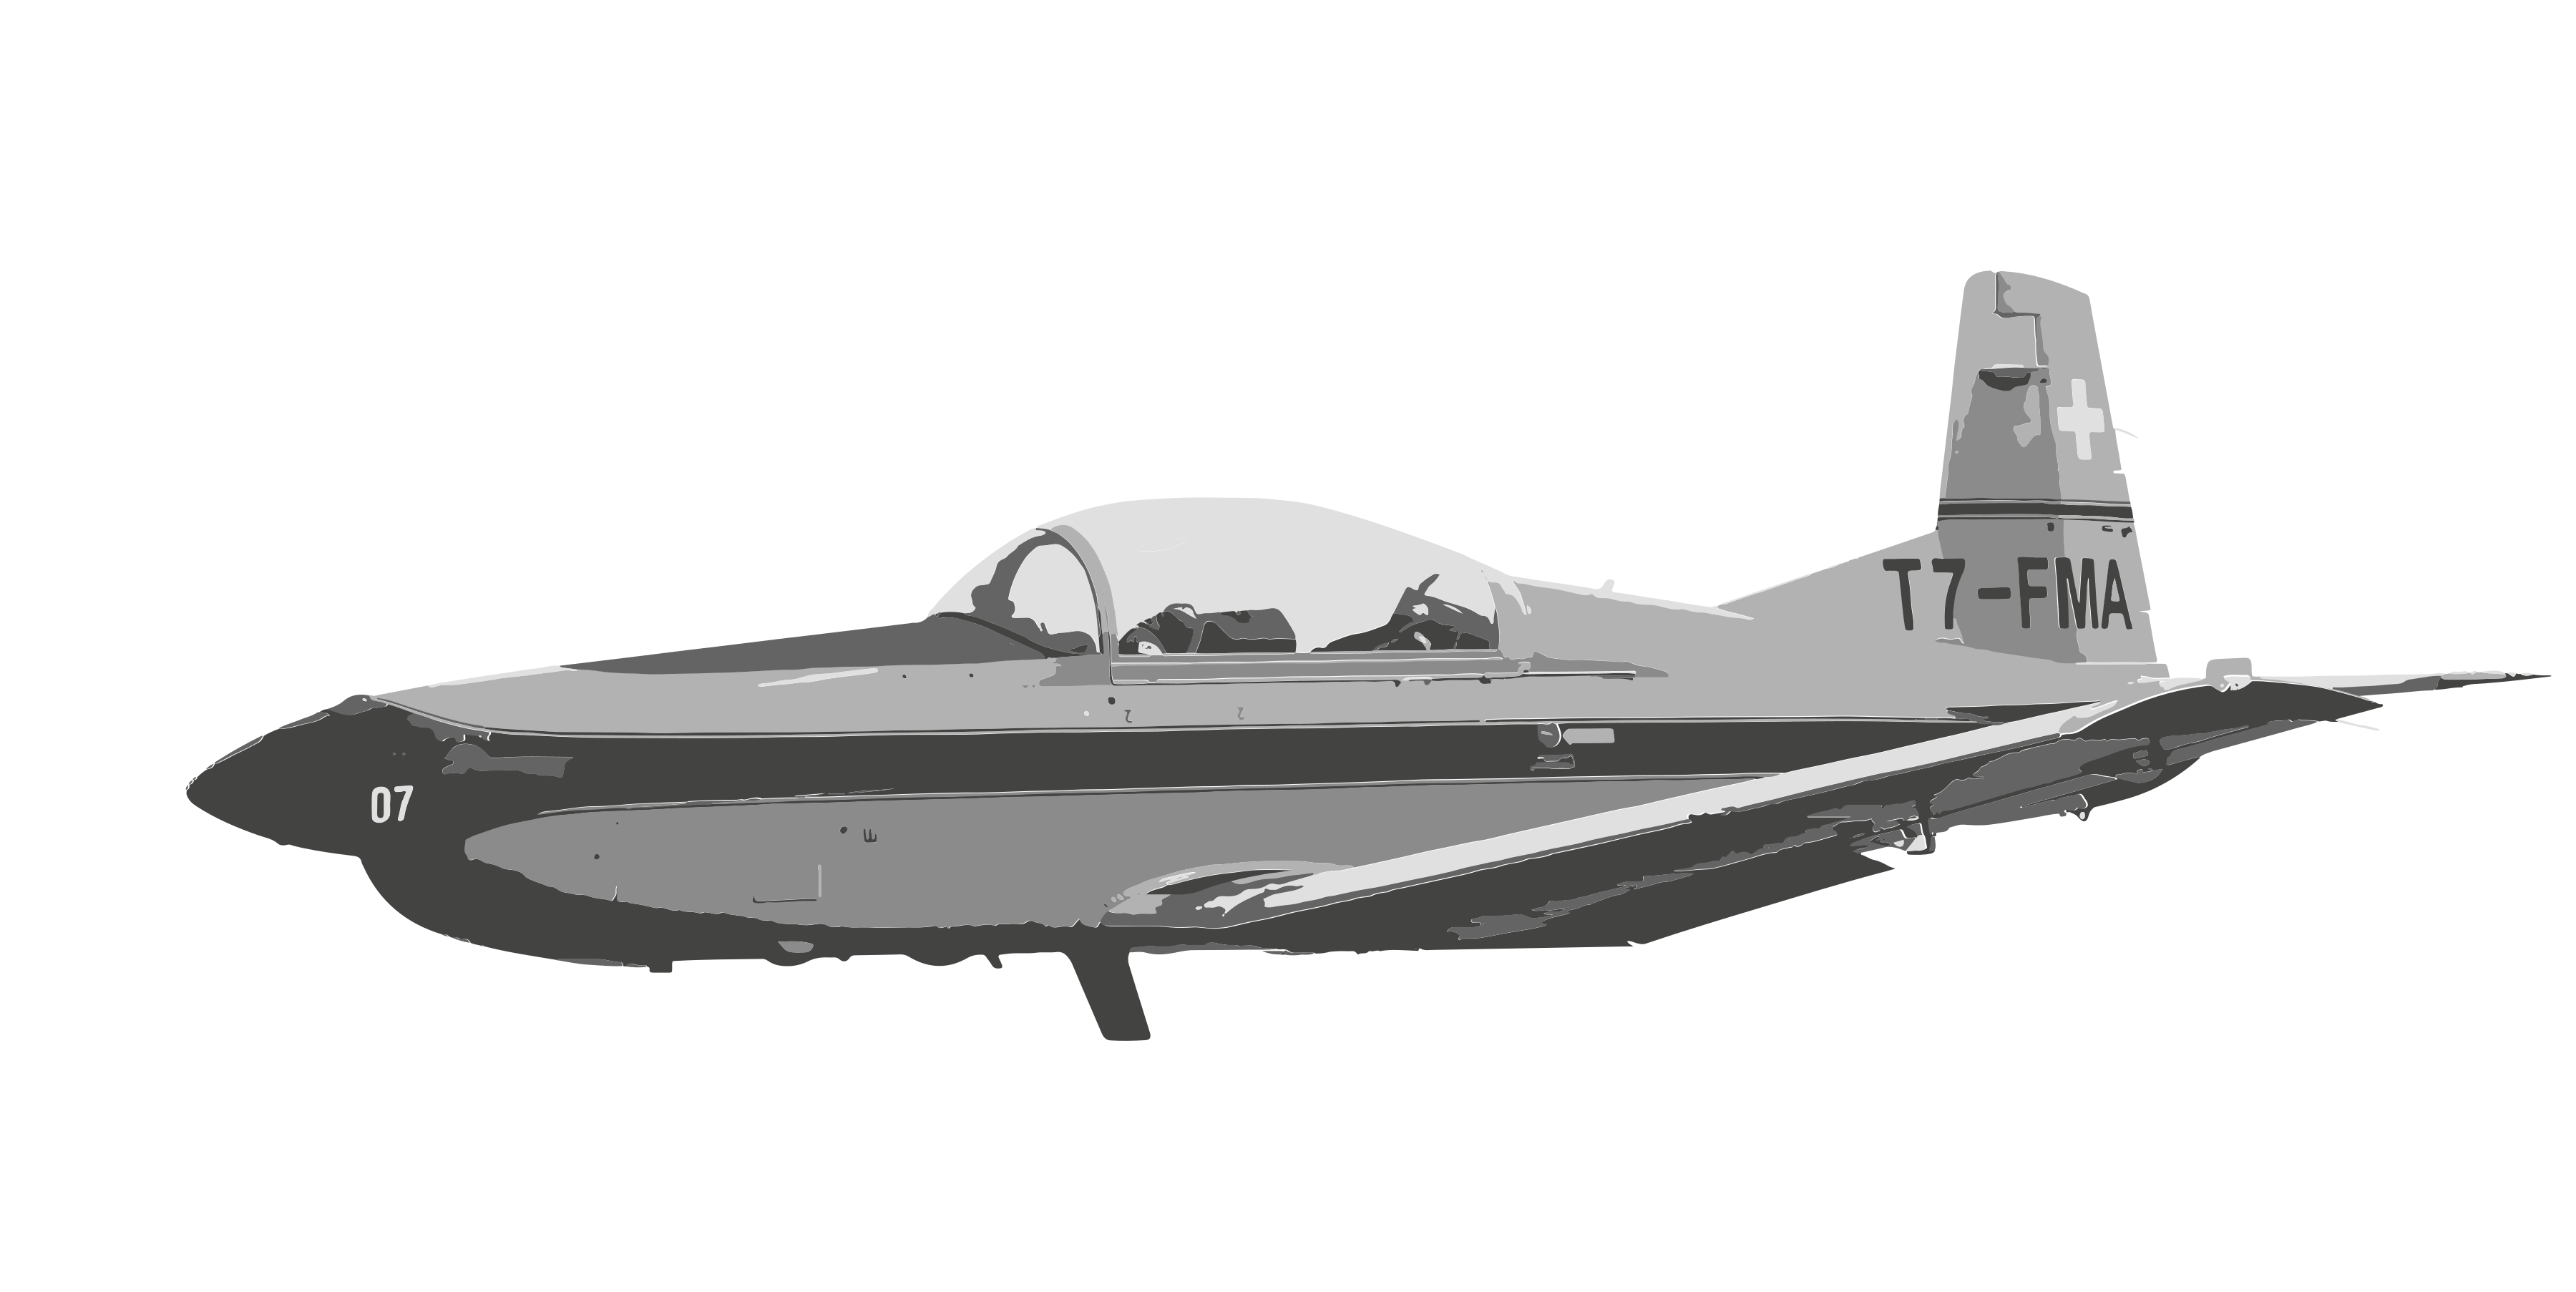 Pilatus PC-7 MkI “T7-FMA”